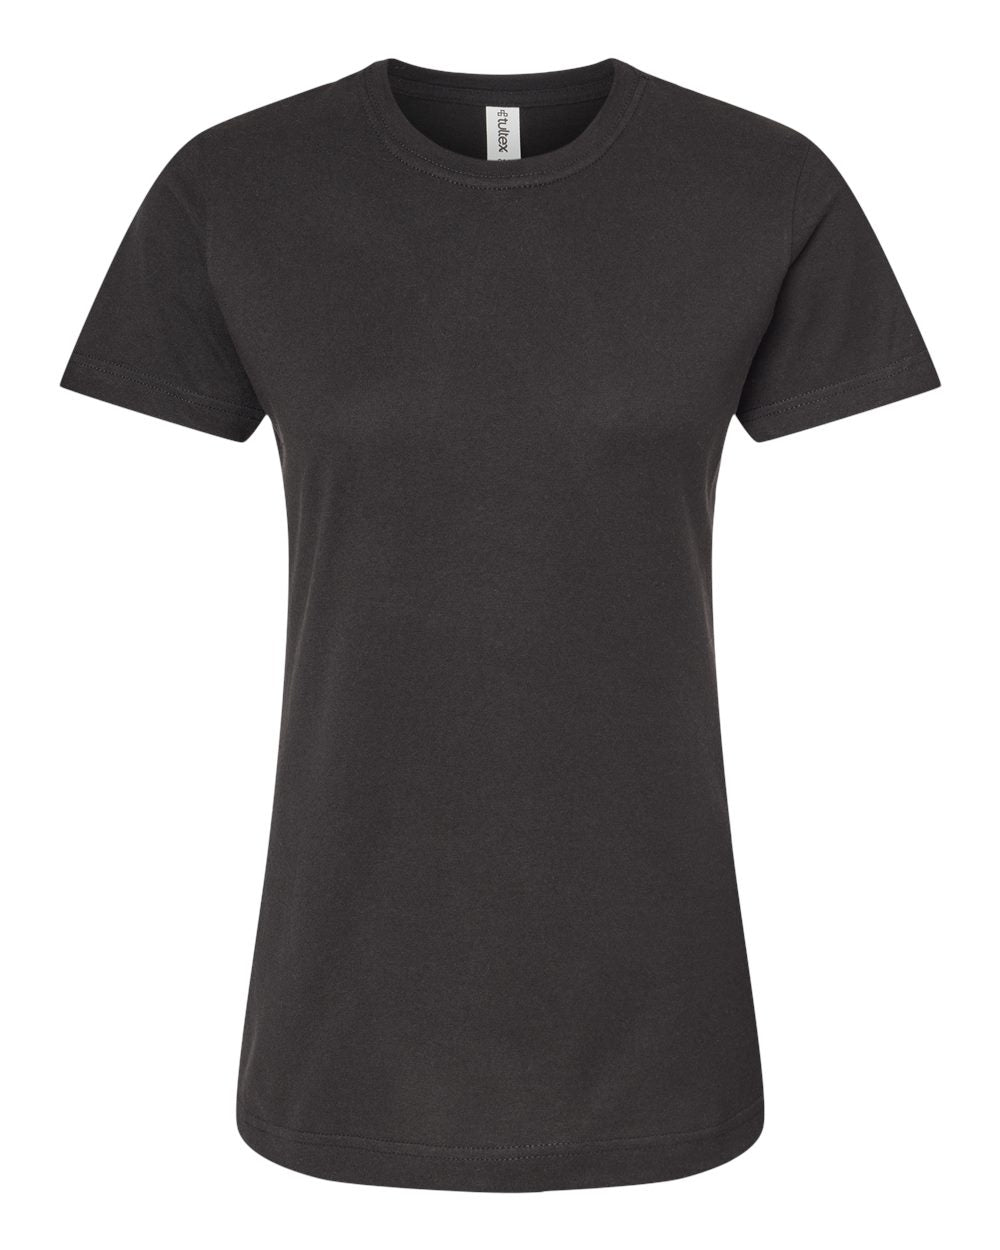 Tultex - Women's Fine Jersey Classic Fit T-Shirt - 216